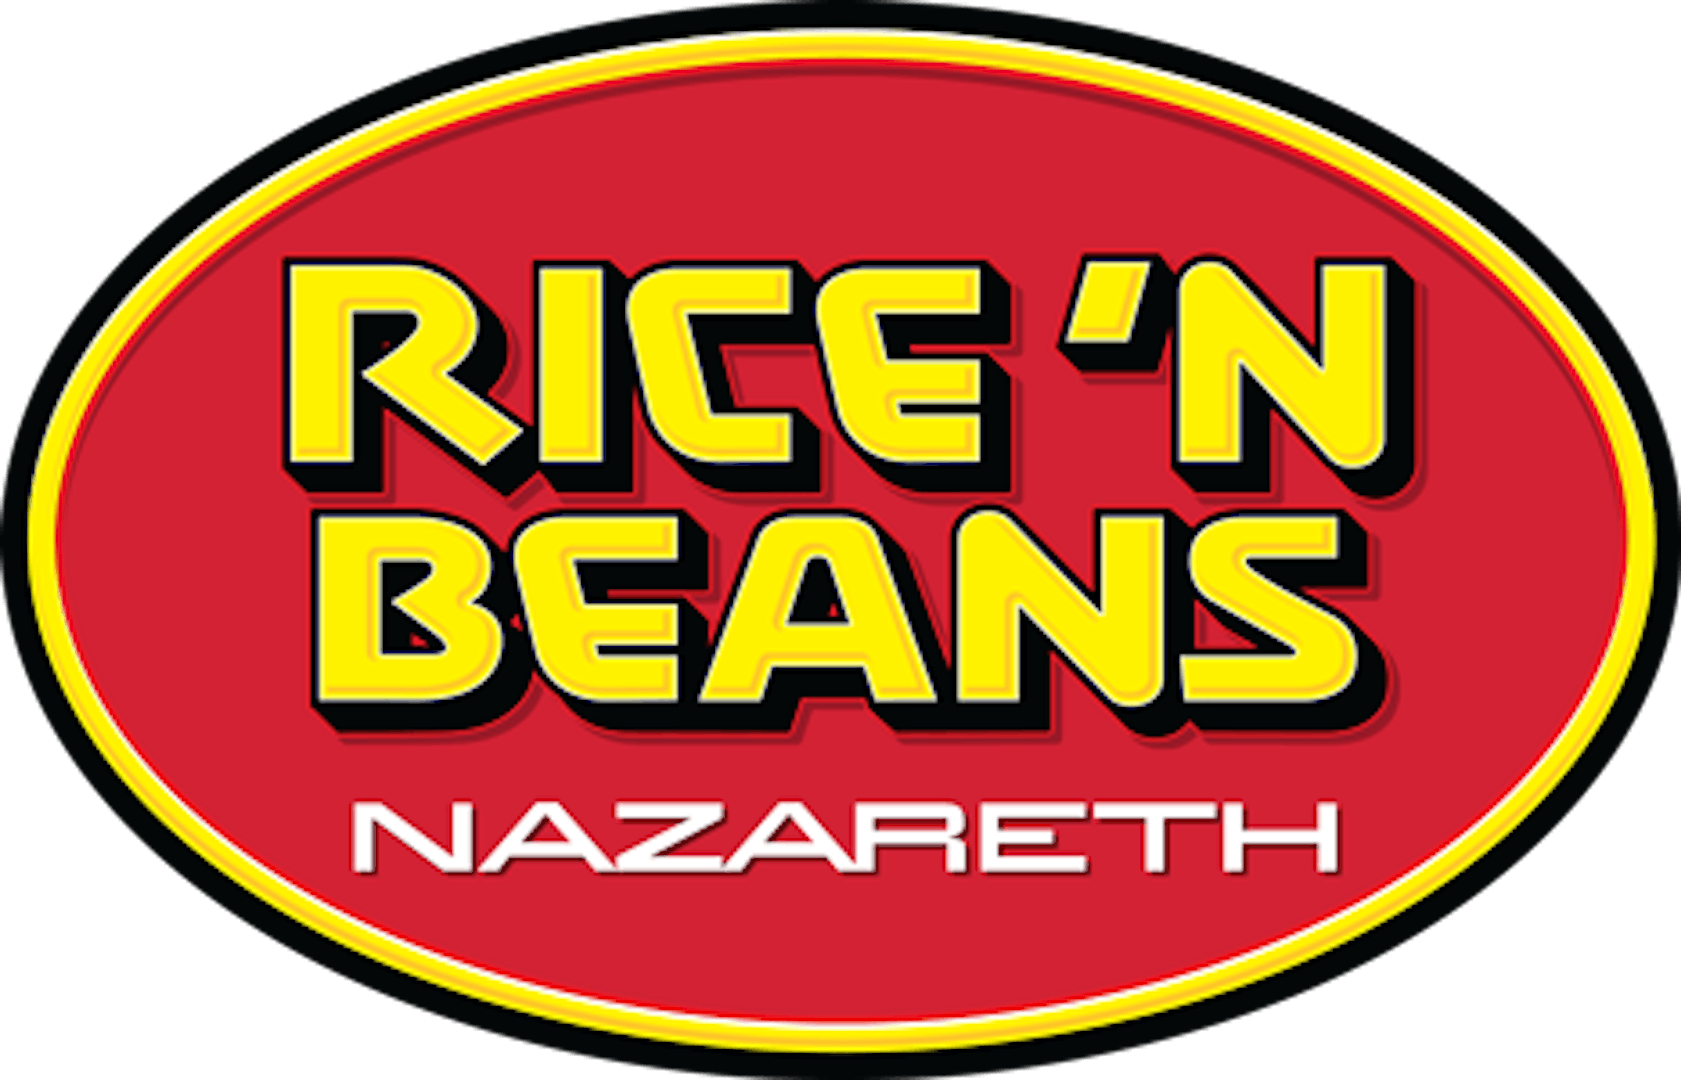 Rice 'N Beans